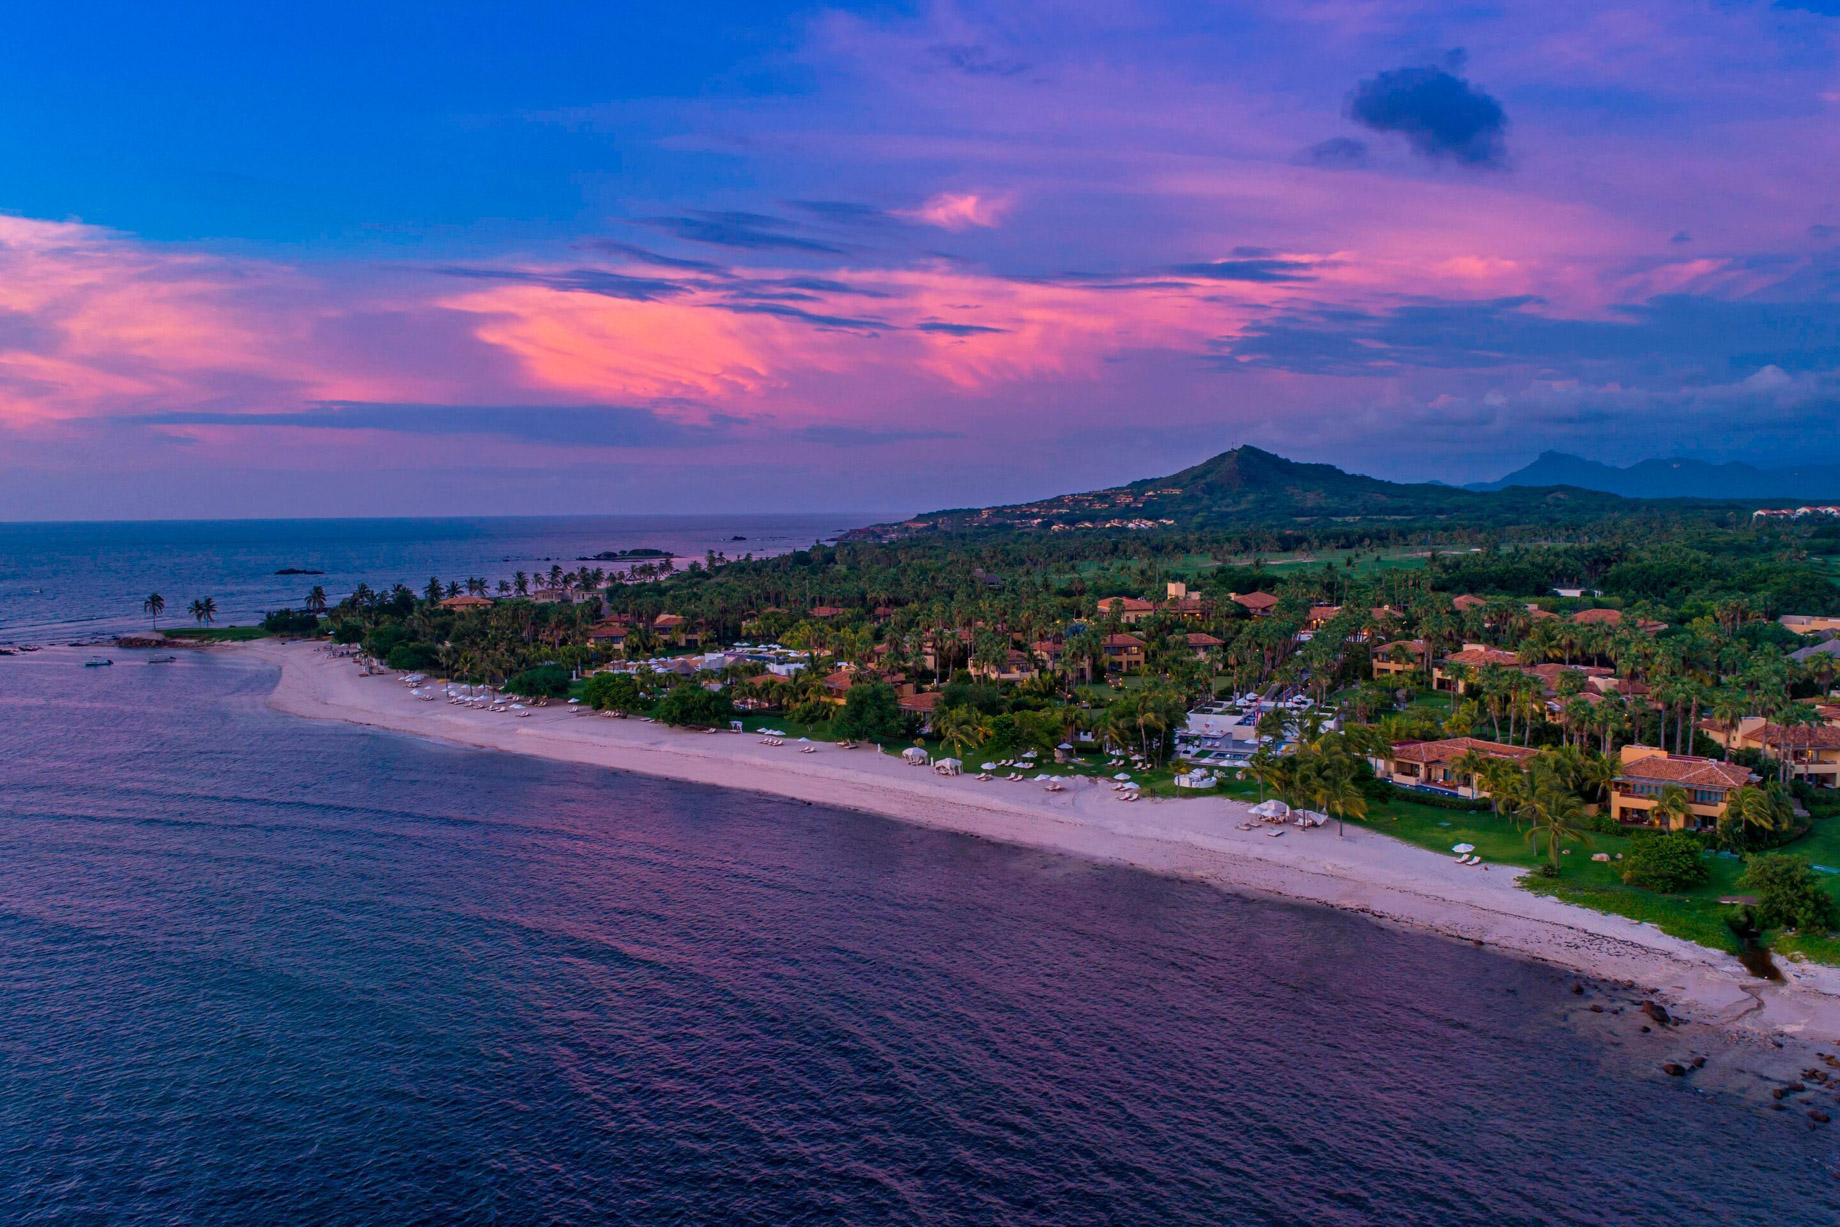 The St. Regis Punta Mita Resort – Nayarit, Mexico – Resort Aerial View Sunset